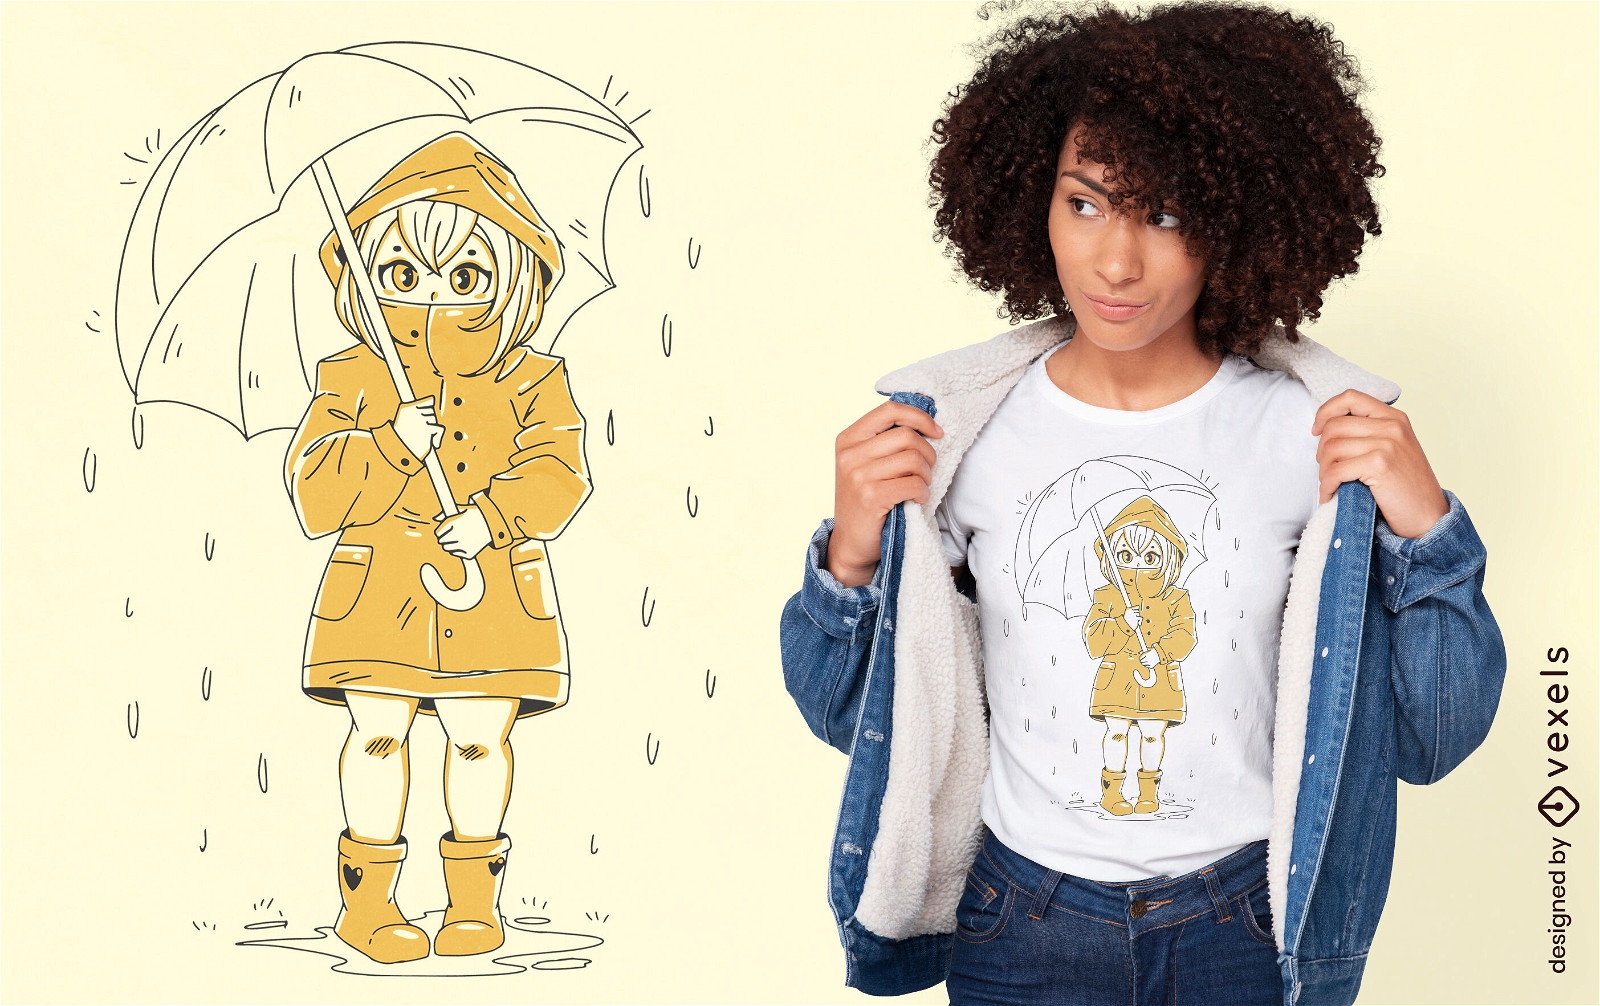 Chica con paraguas y dise?o de camiseta impermeable.